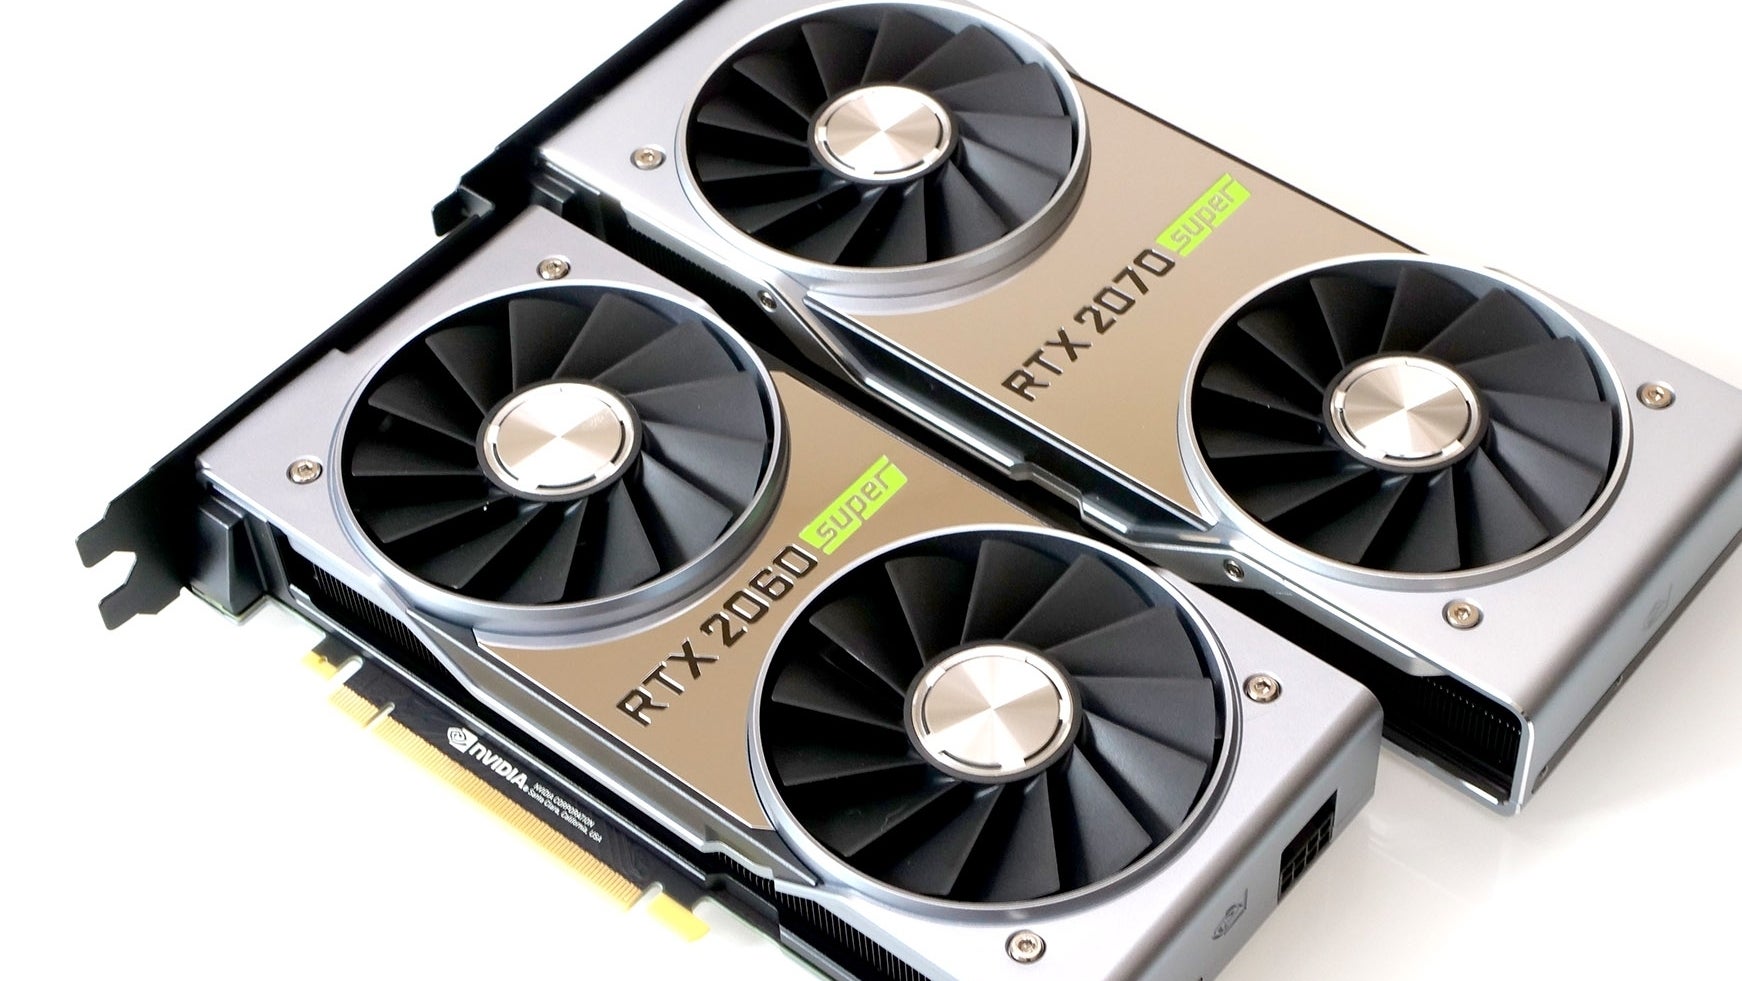 Nvidia GeForce RTX 2060 / RTX 2070 Super review: timely upgrades | Eurogamer.net